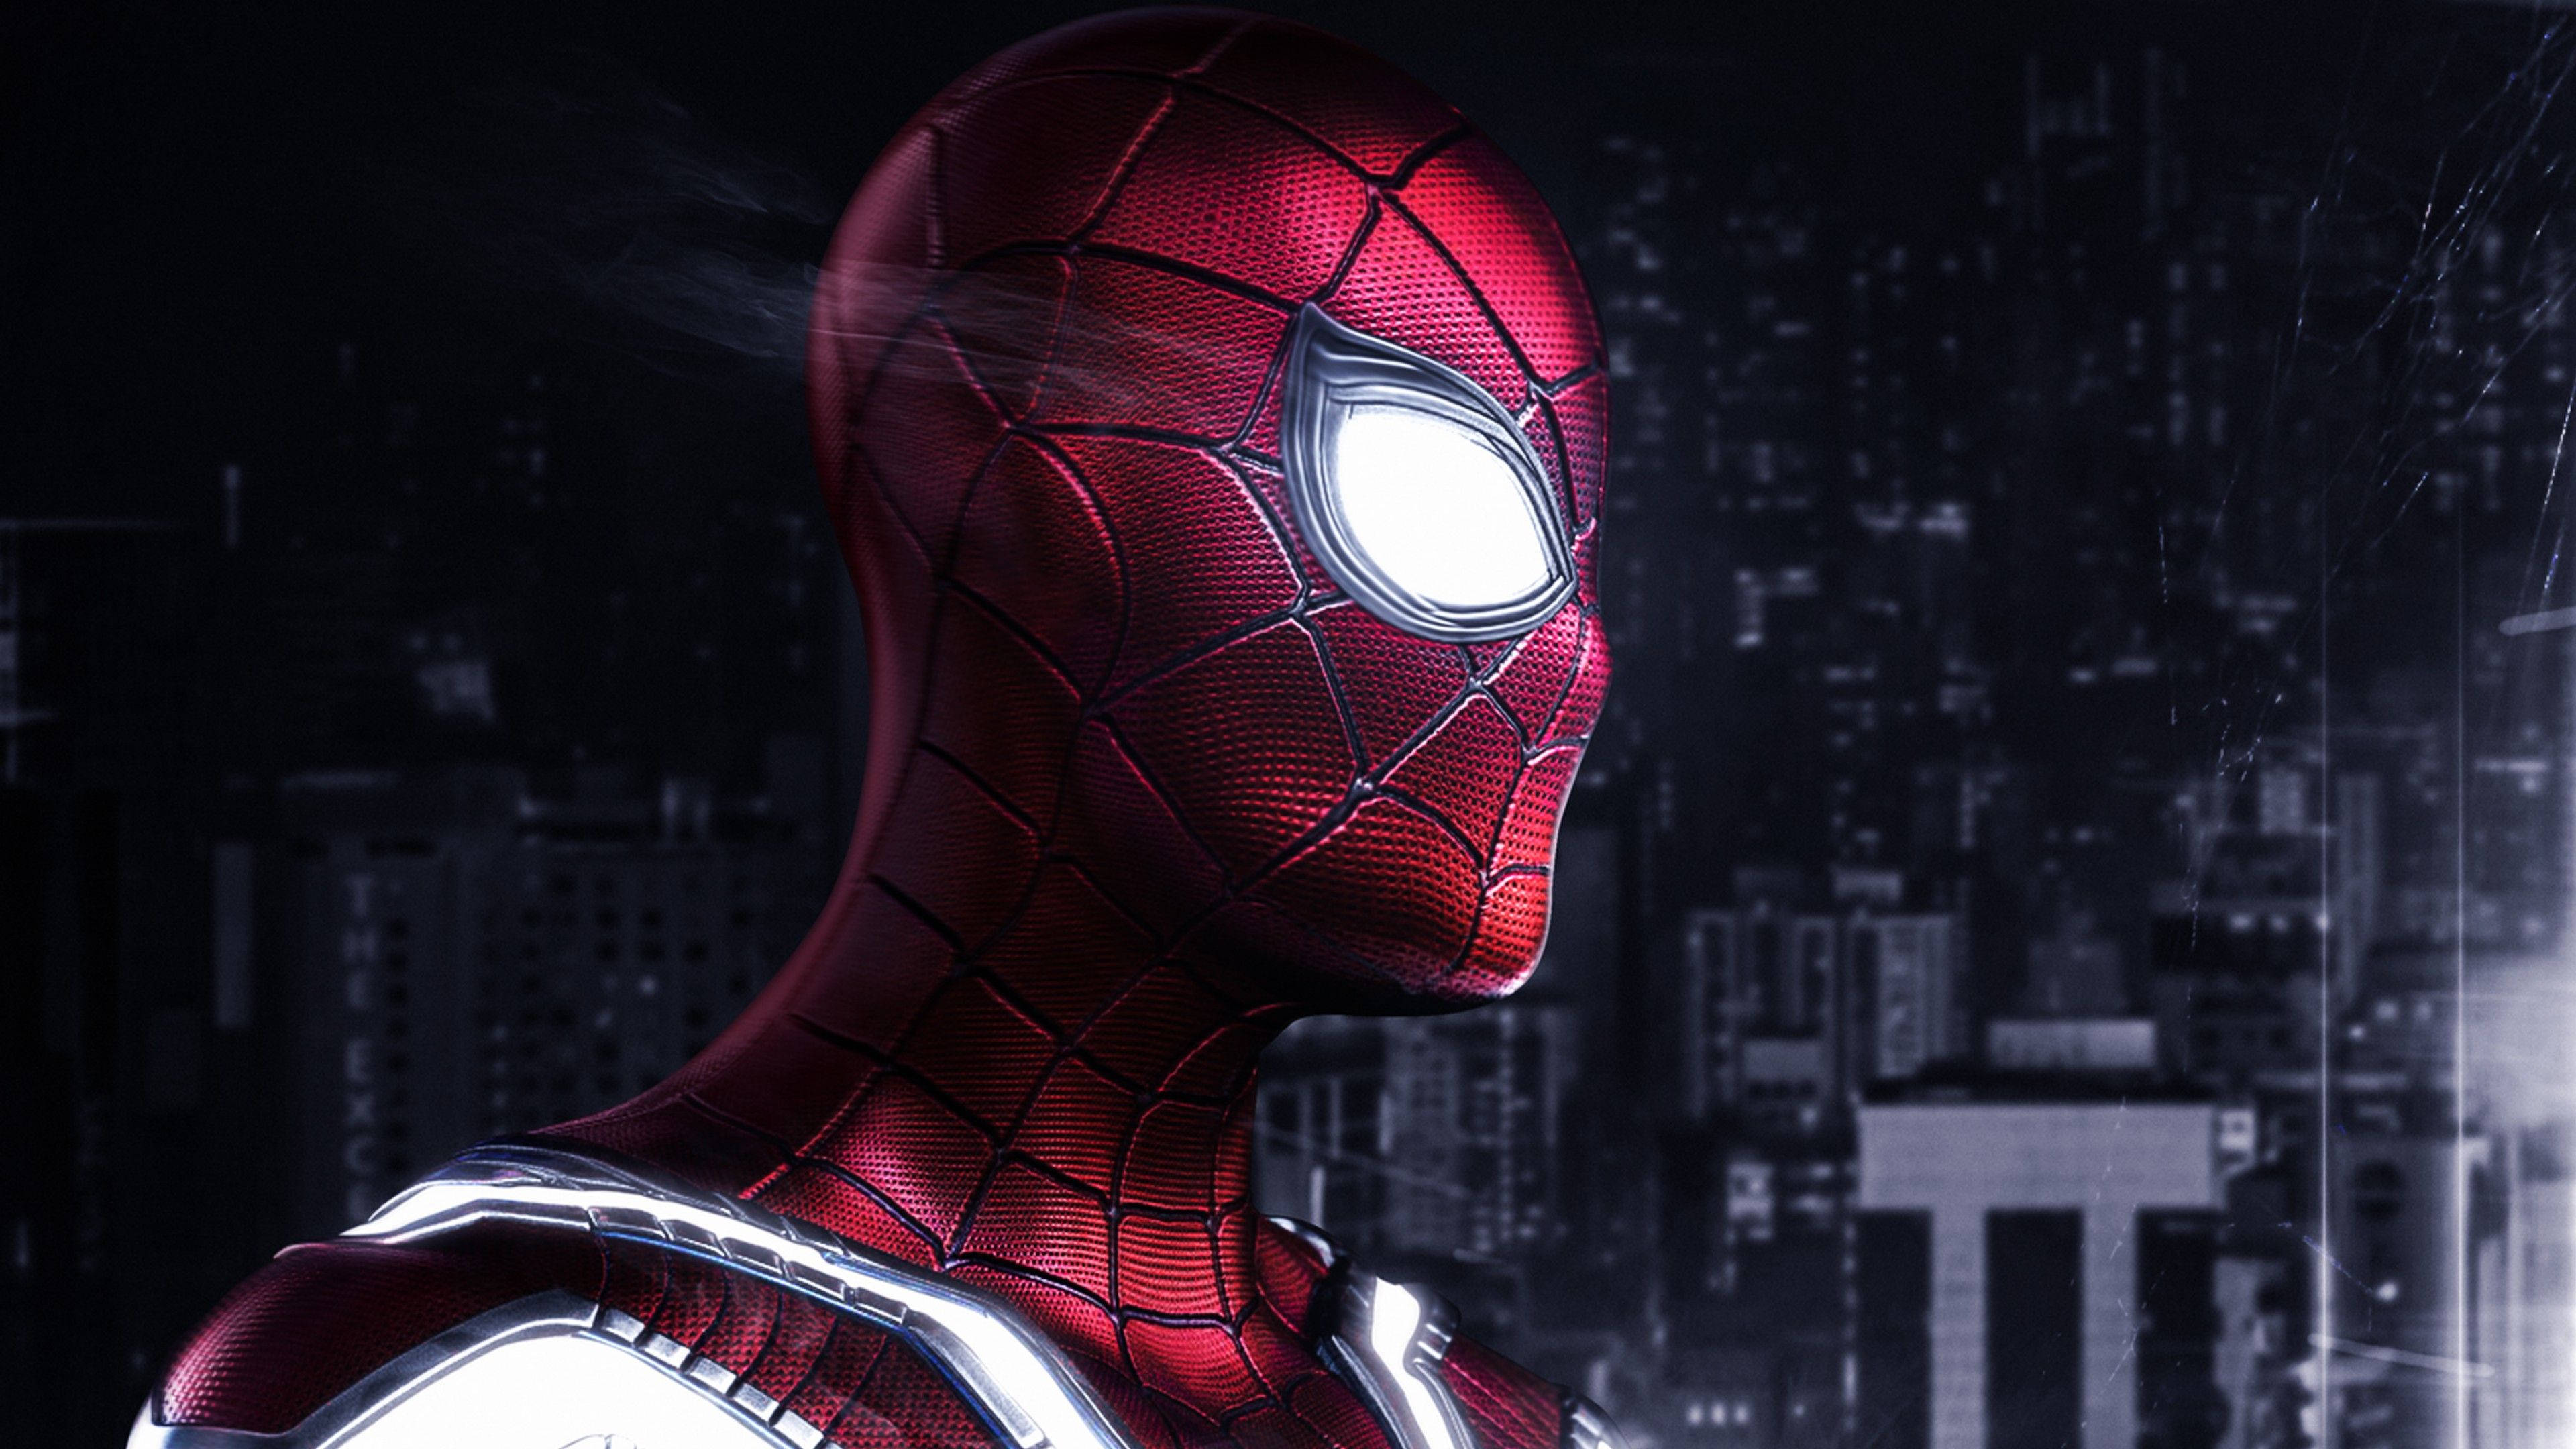 Spiderman Iron Spider Nighttime Cityscape